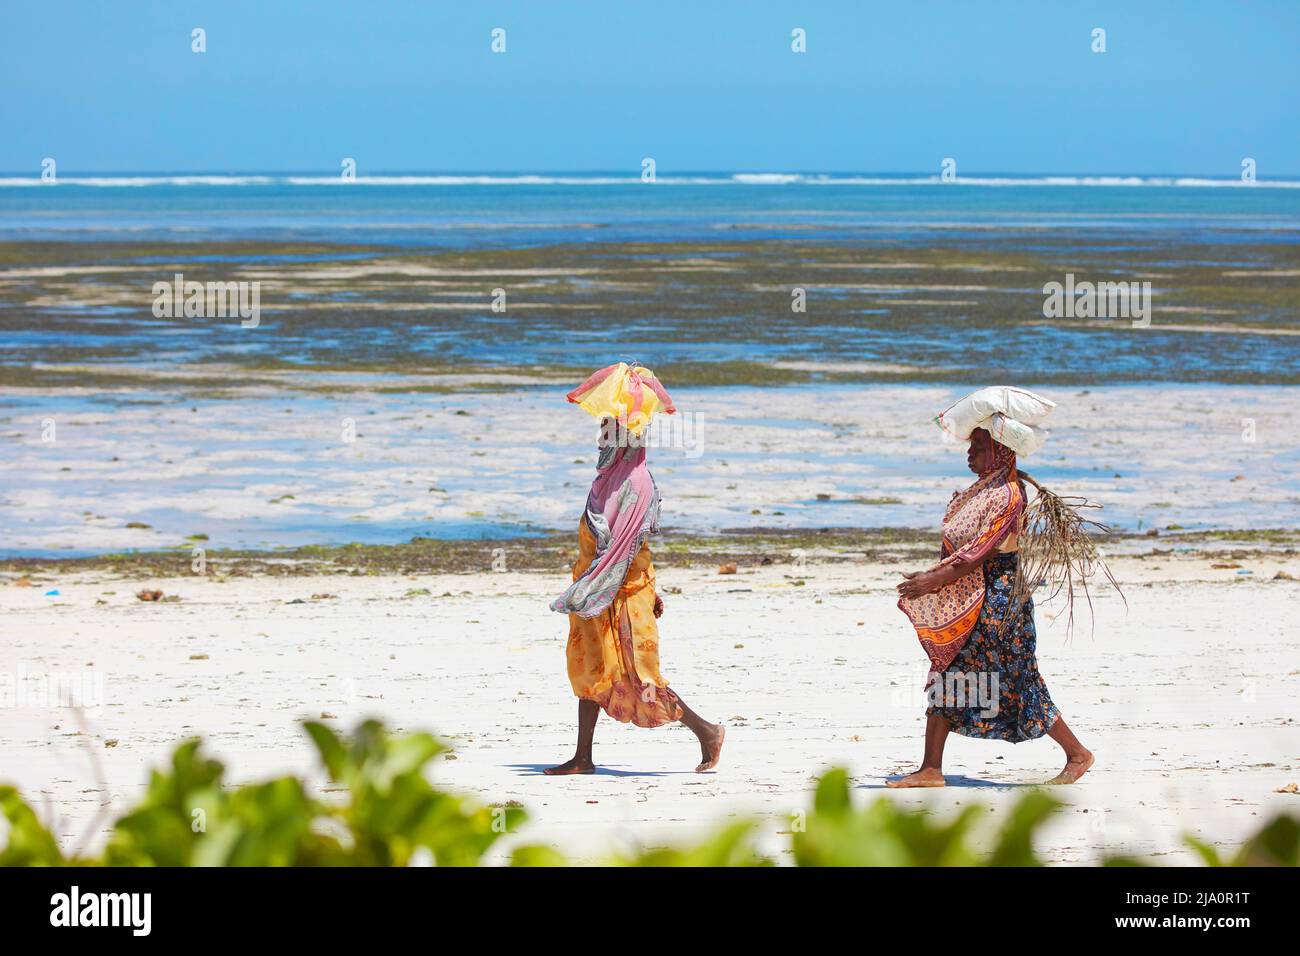 Women with colorful clothes walking on the beach of Jambiani, Zanzibar, Tanzania, Africa. Stock Photo